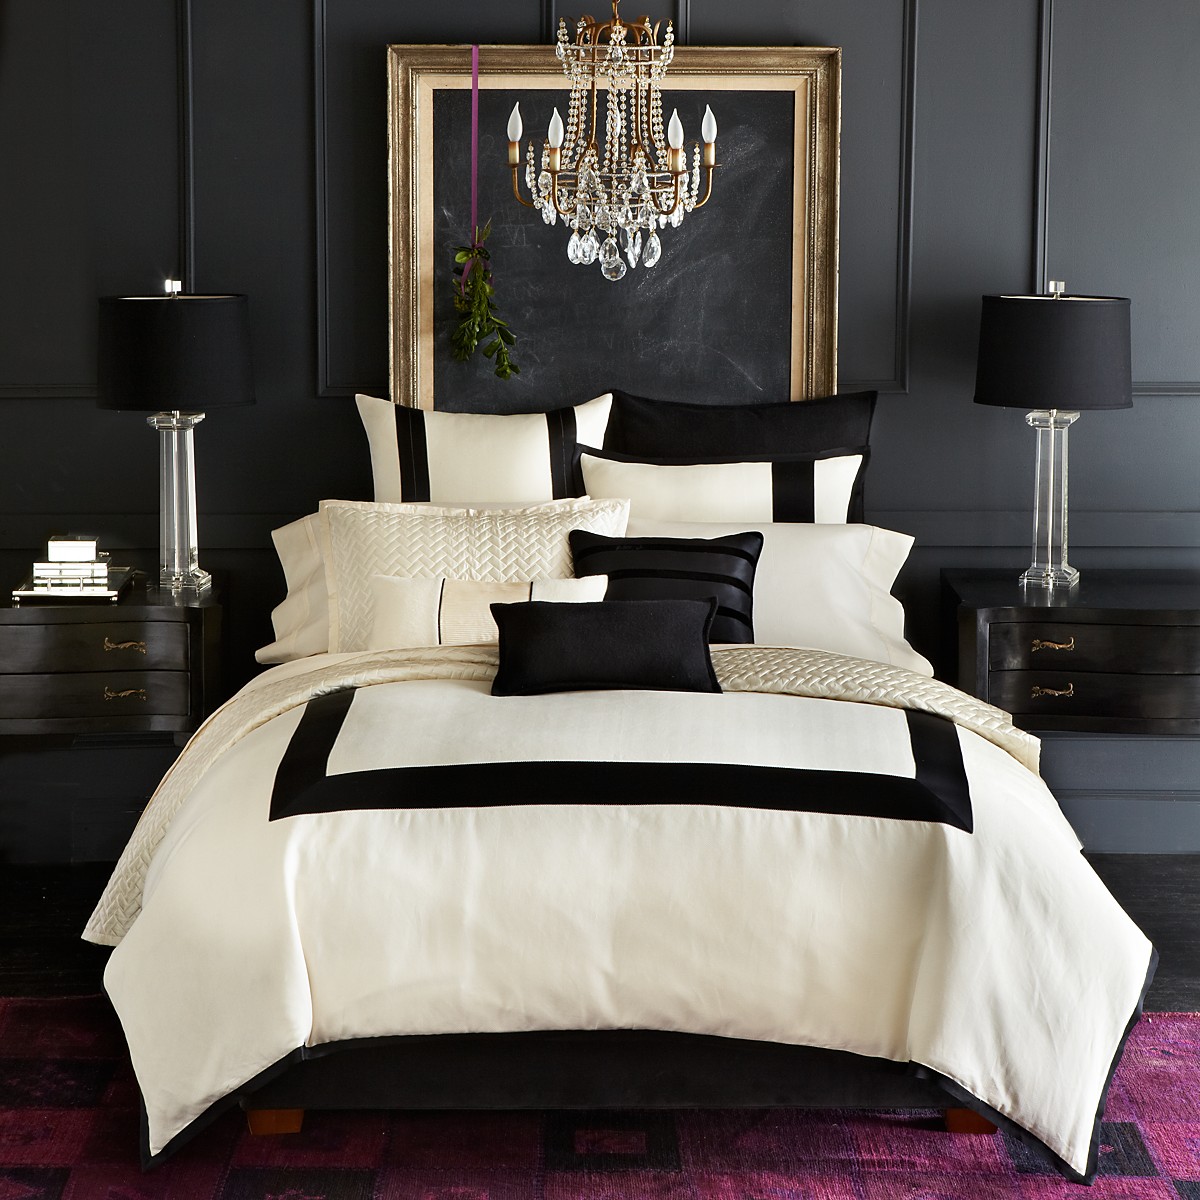 Black And White For Modern Bedroom Design Idea Design On Vine